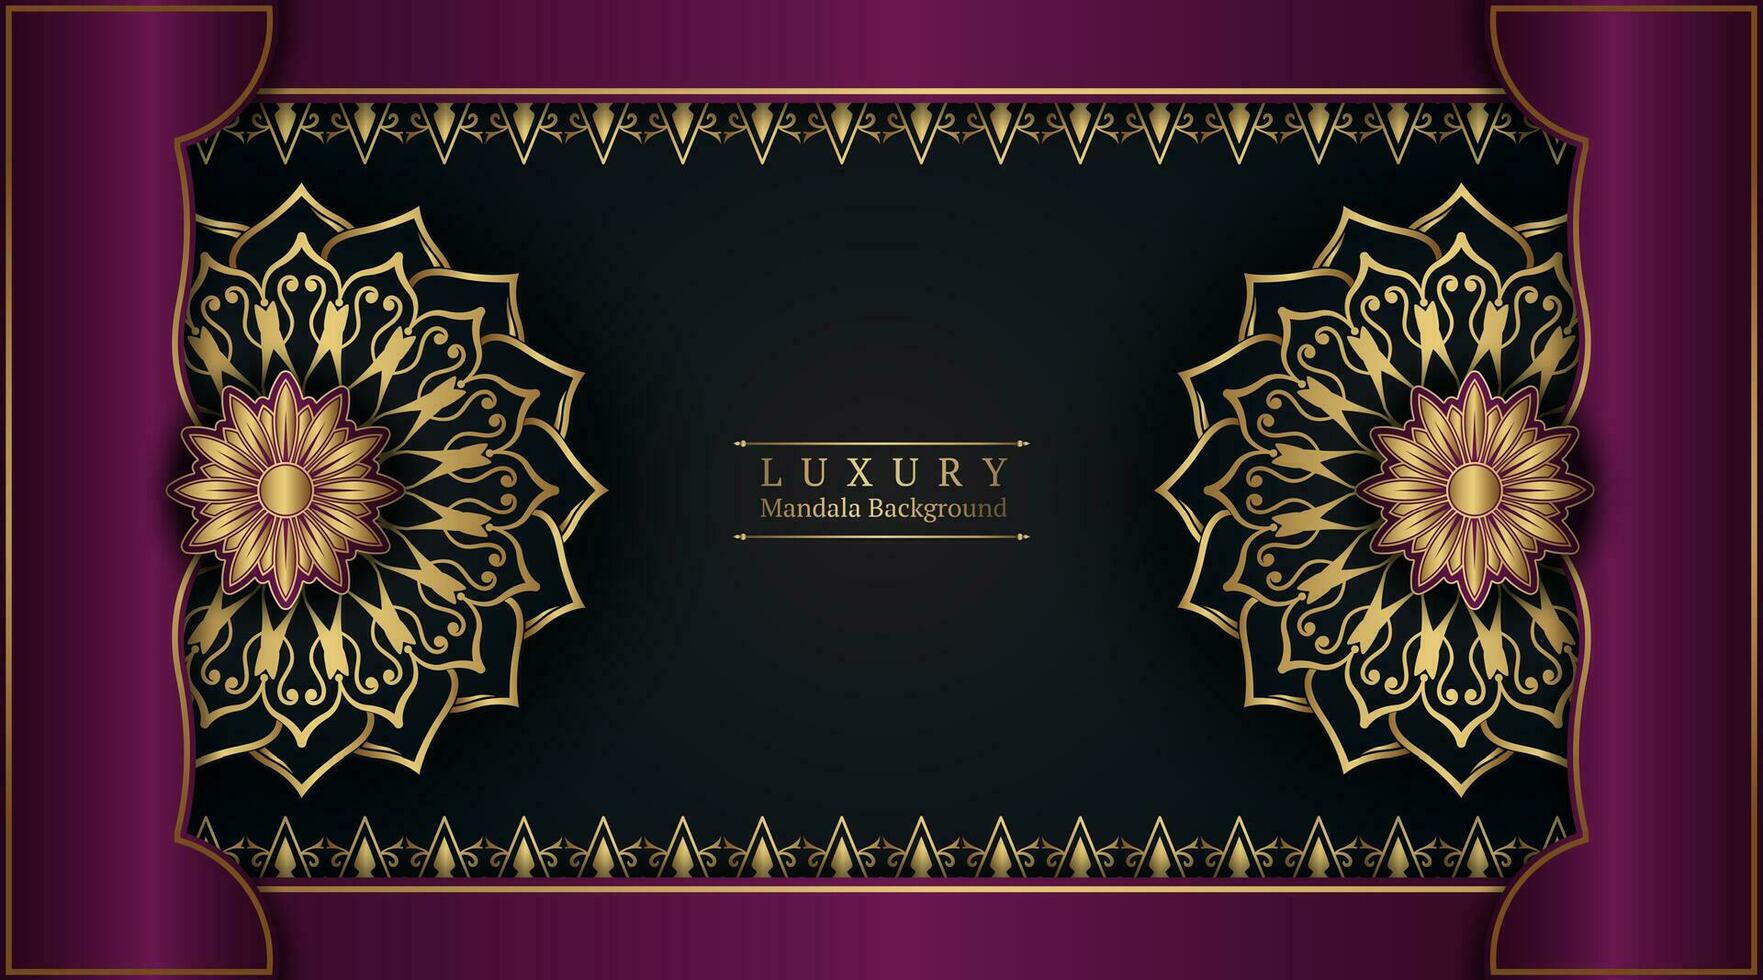 Luxury mandala background, purple and black vector